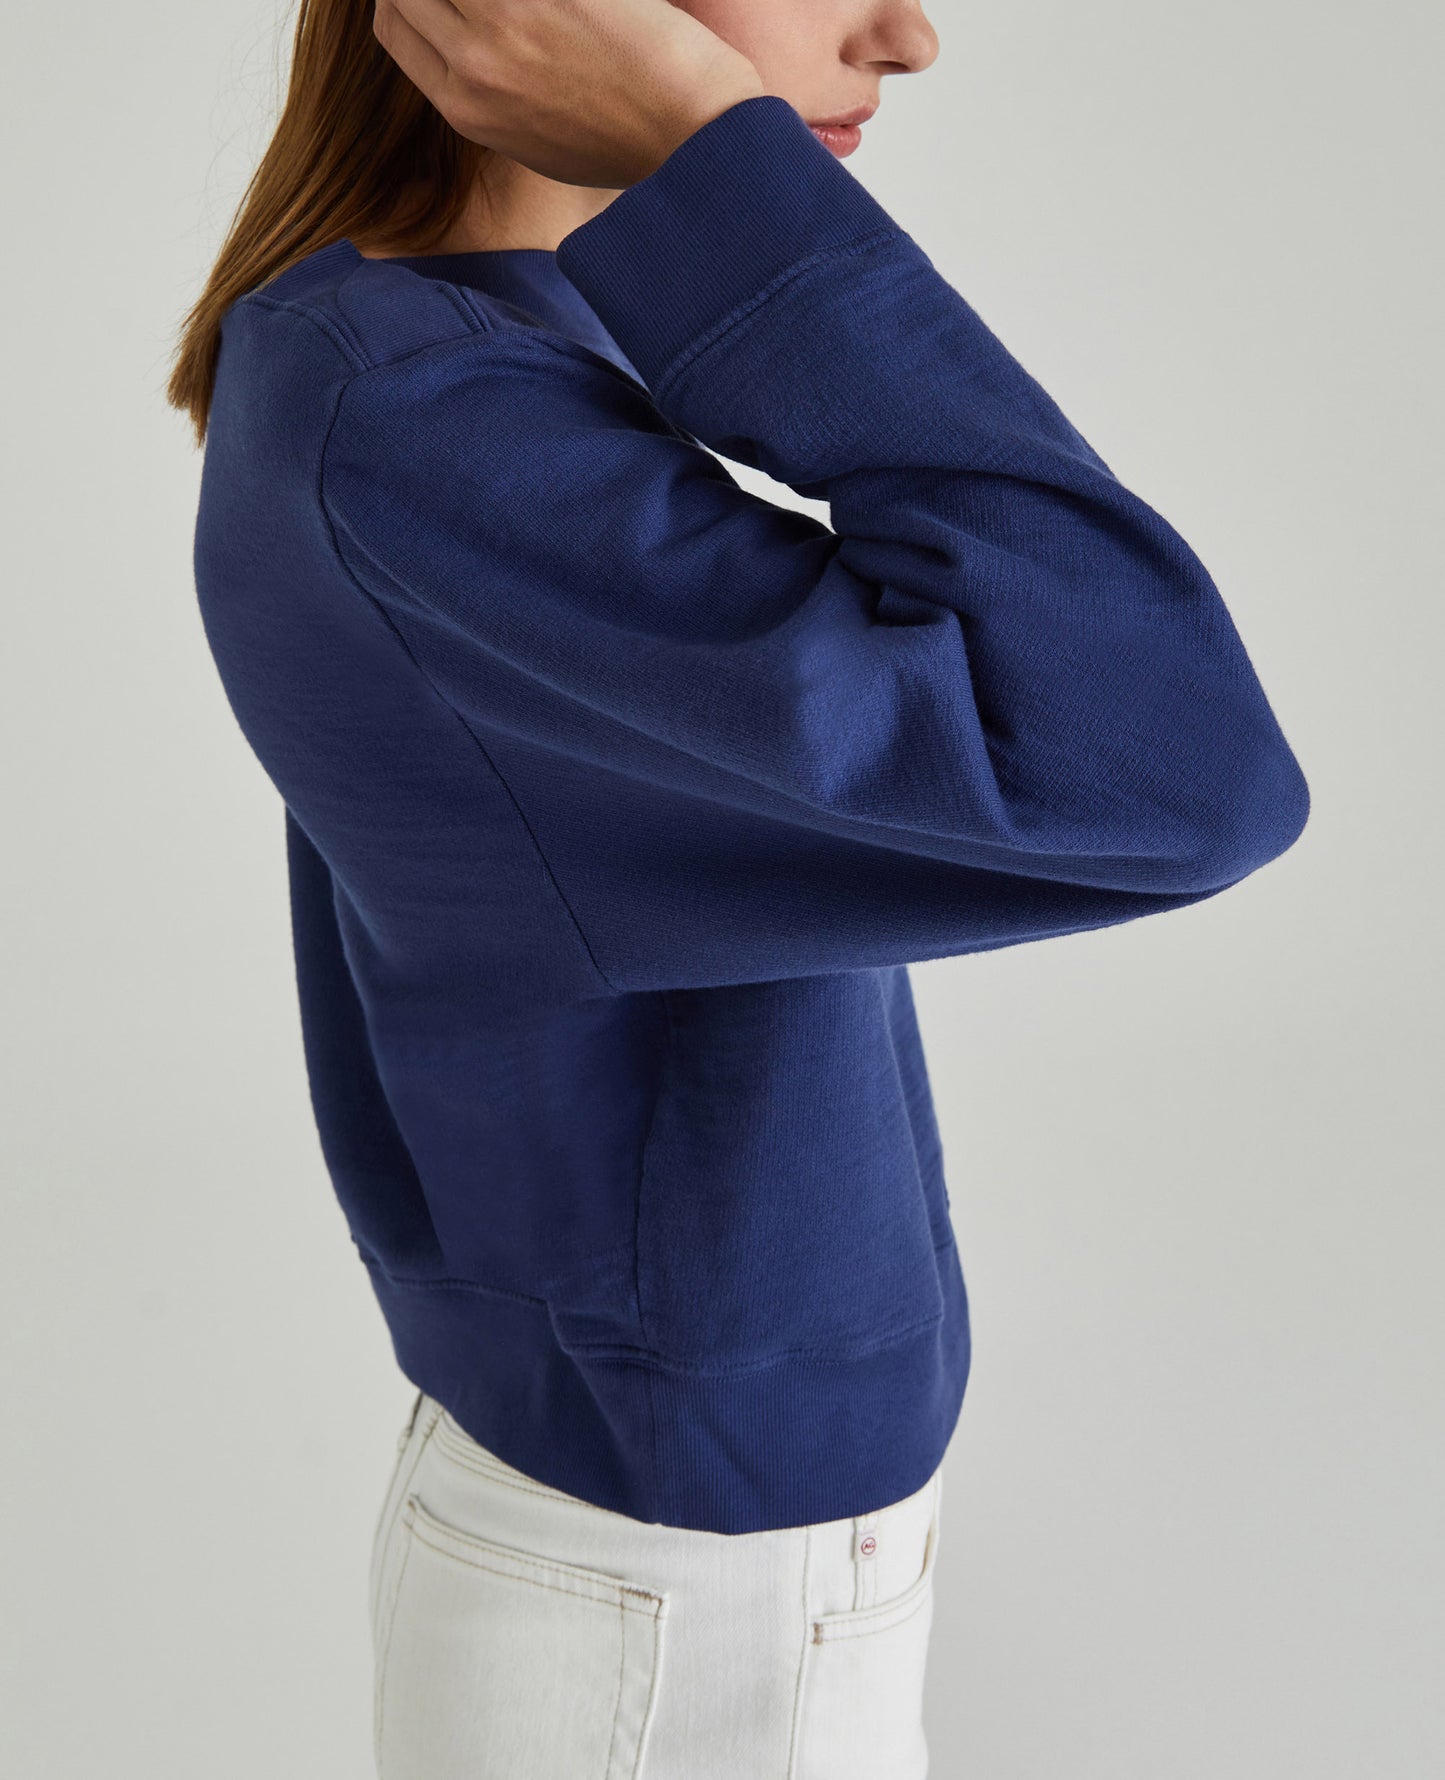 Cyra Sweatshirt Bright Indigo Snap Button Sweatshirt Women Tops Photo 3